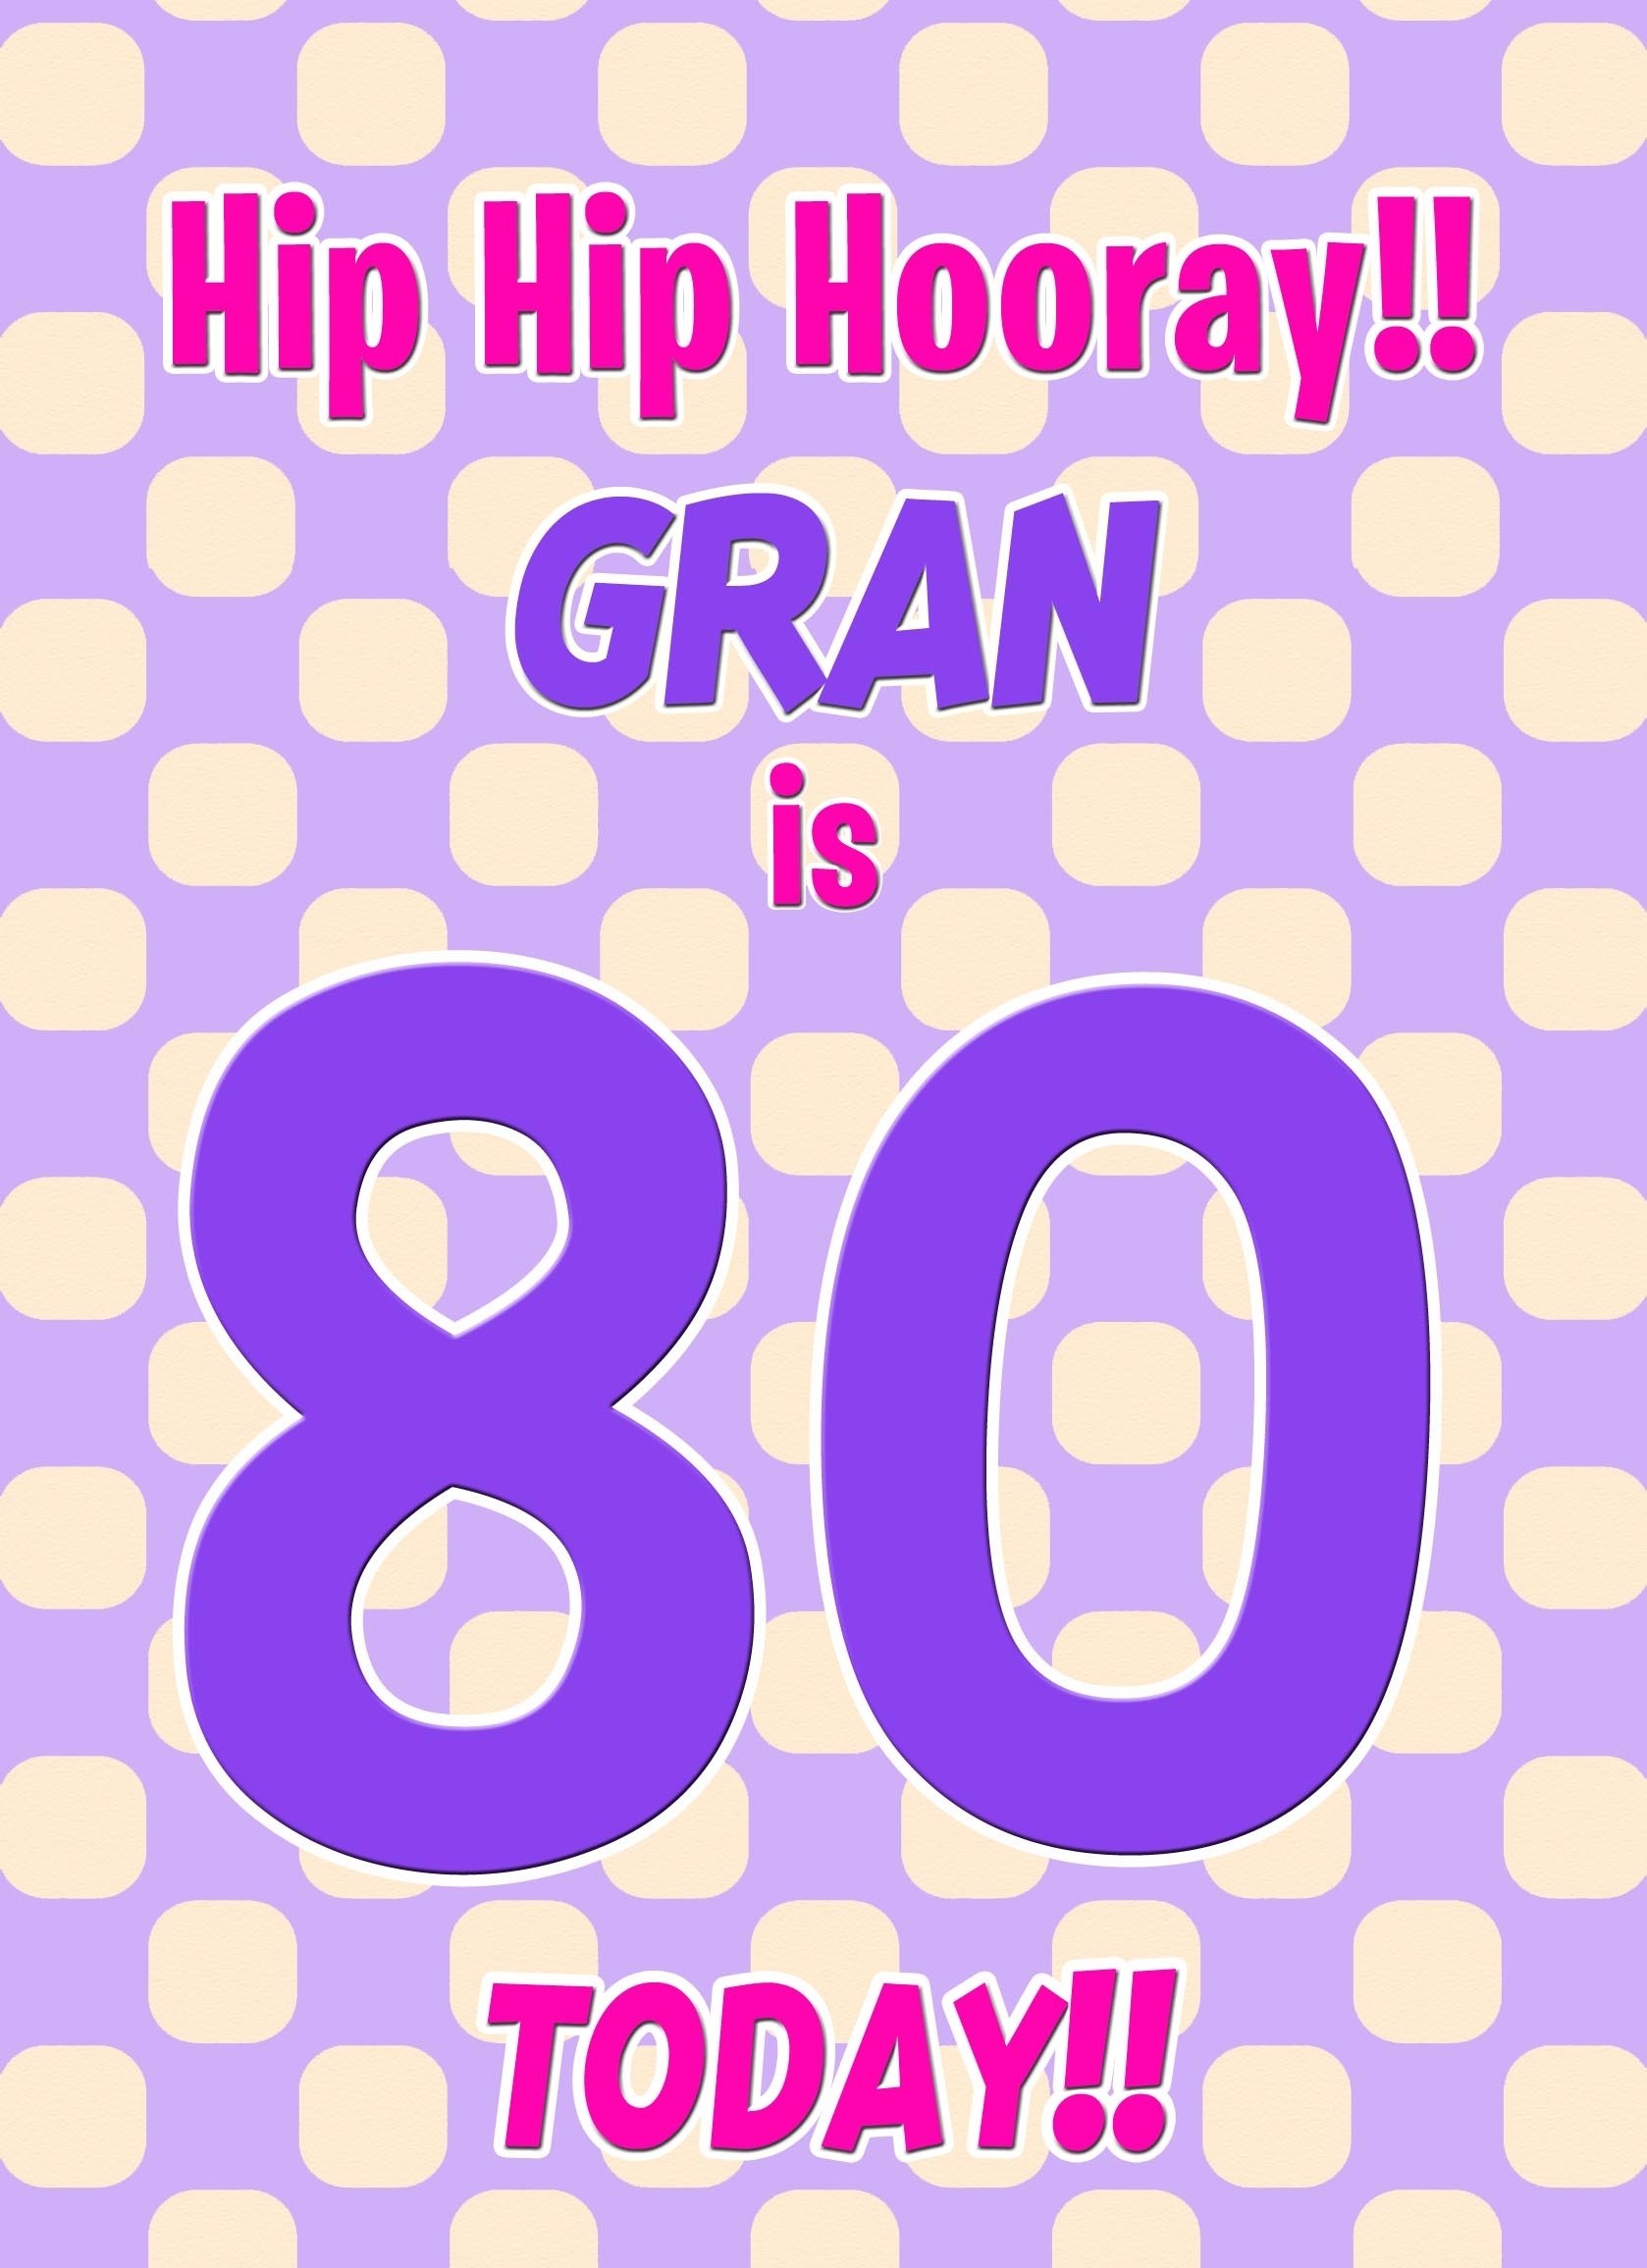 Gran 80th Birthday Card (Purple Spots)